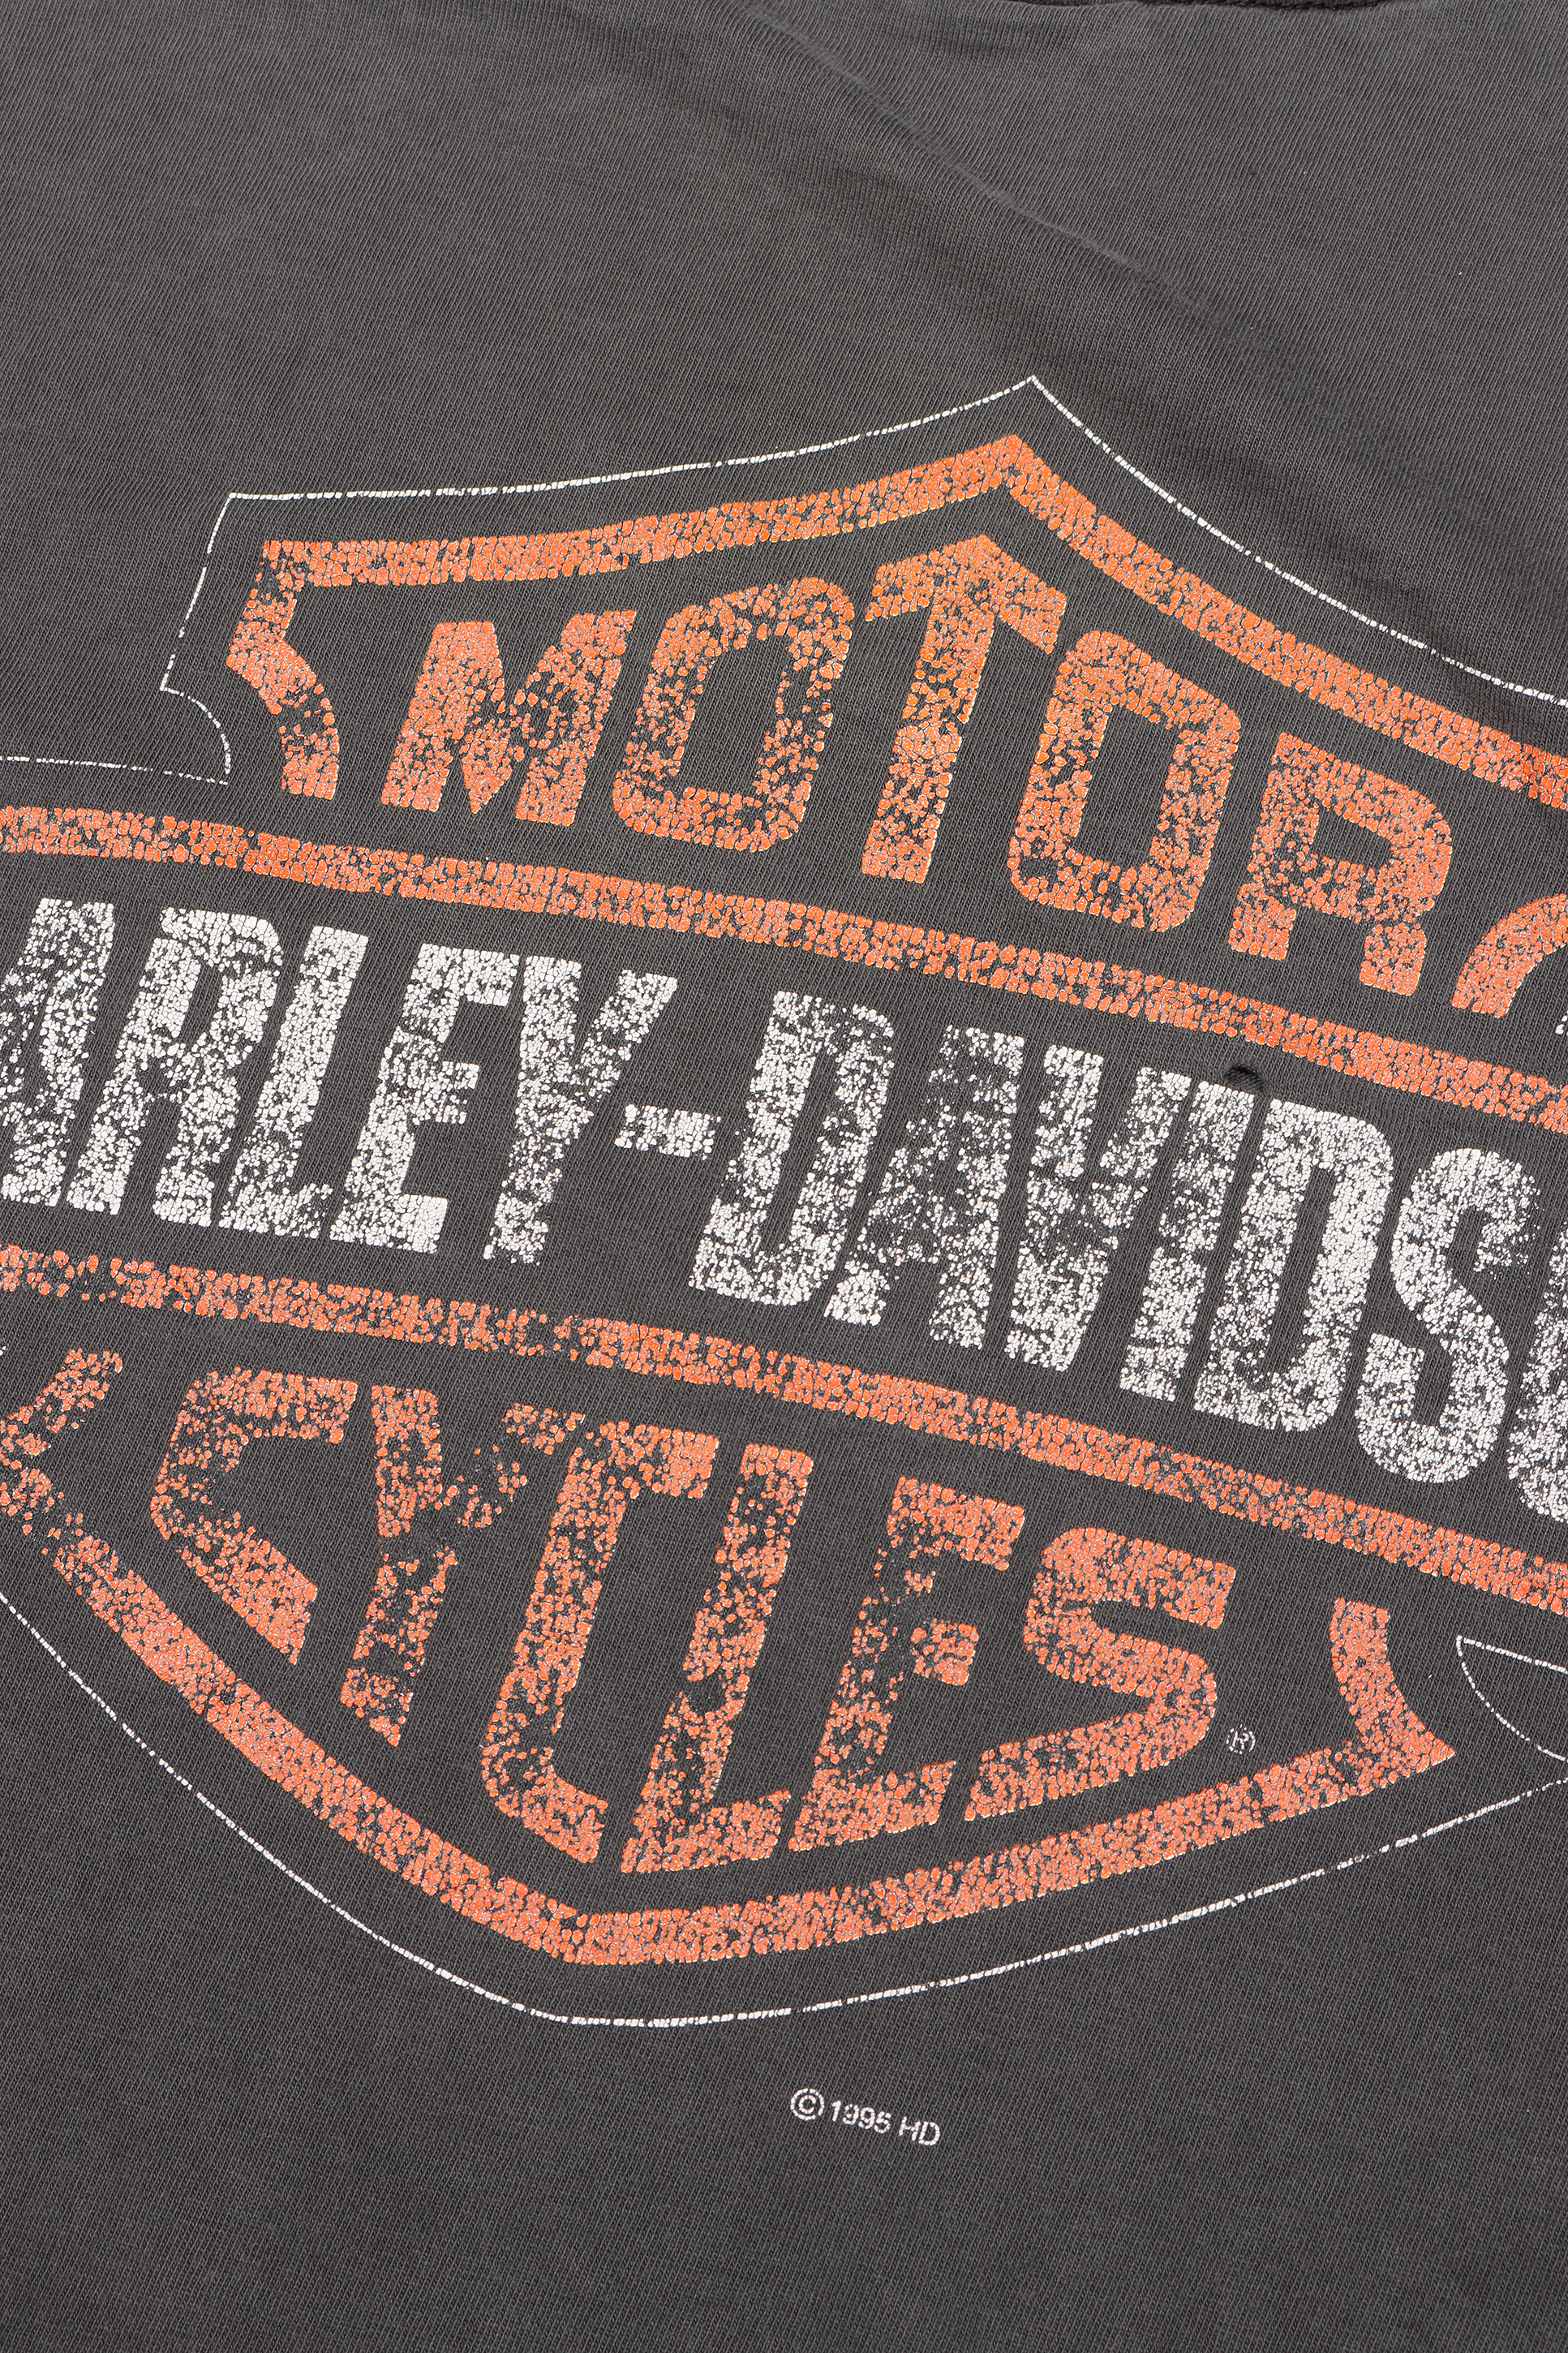 1990's Harley-Davidson Paint Splatter T-Shirt